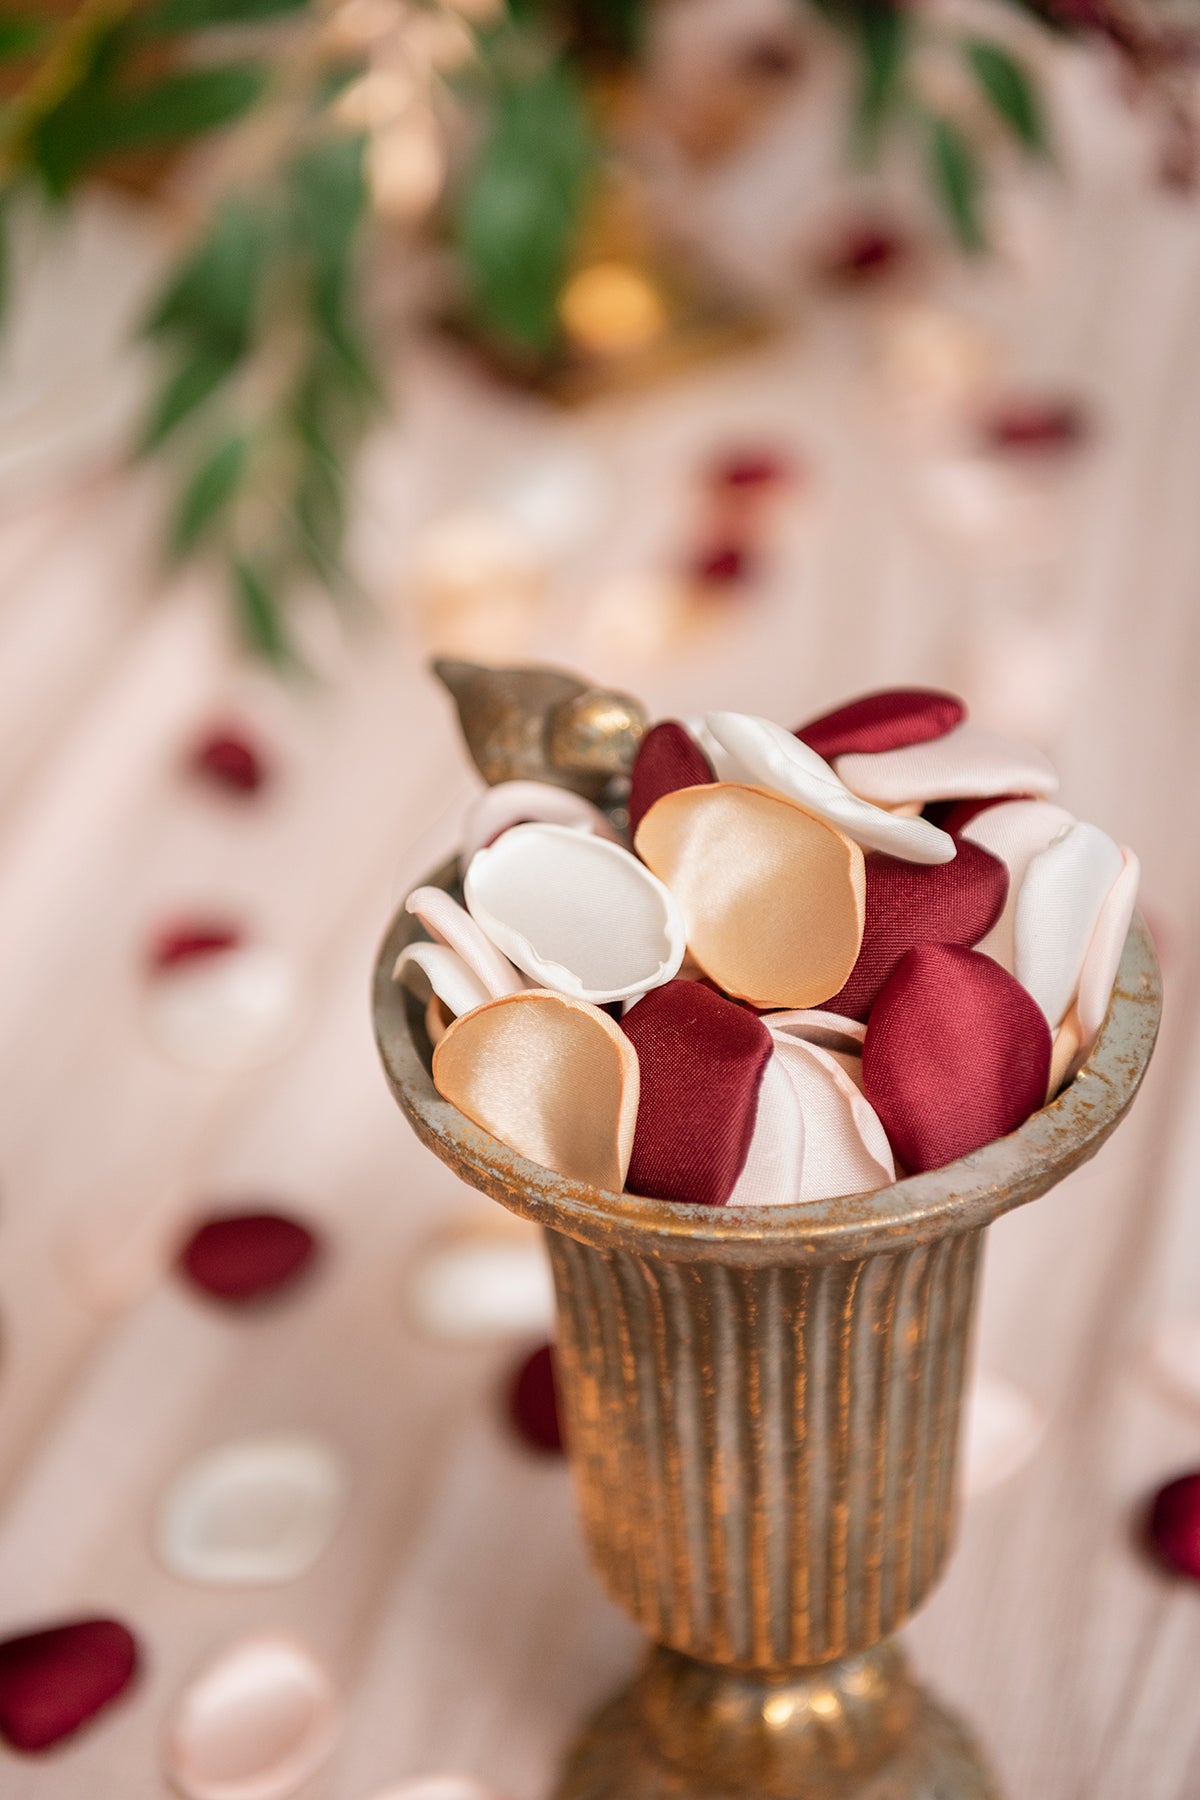 Wedding Rose Petals  Silk Rose Petals 200/400pcs - Red & Burgundy – Ling's  Moment